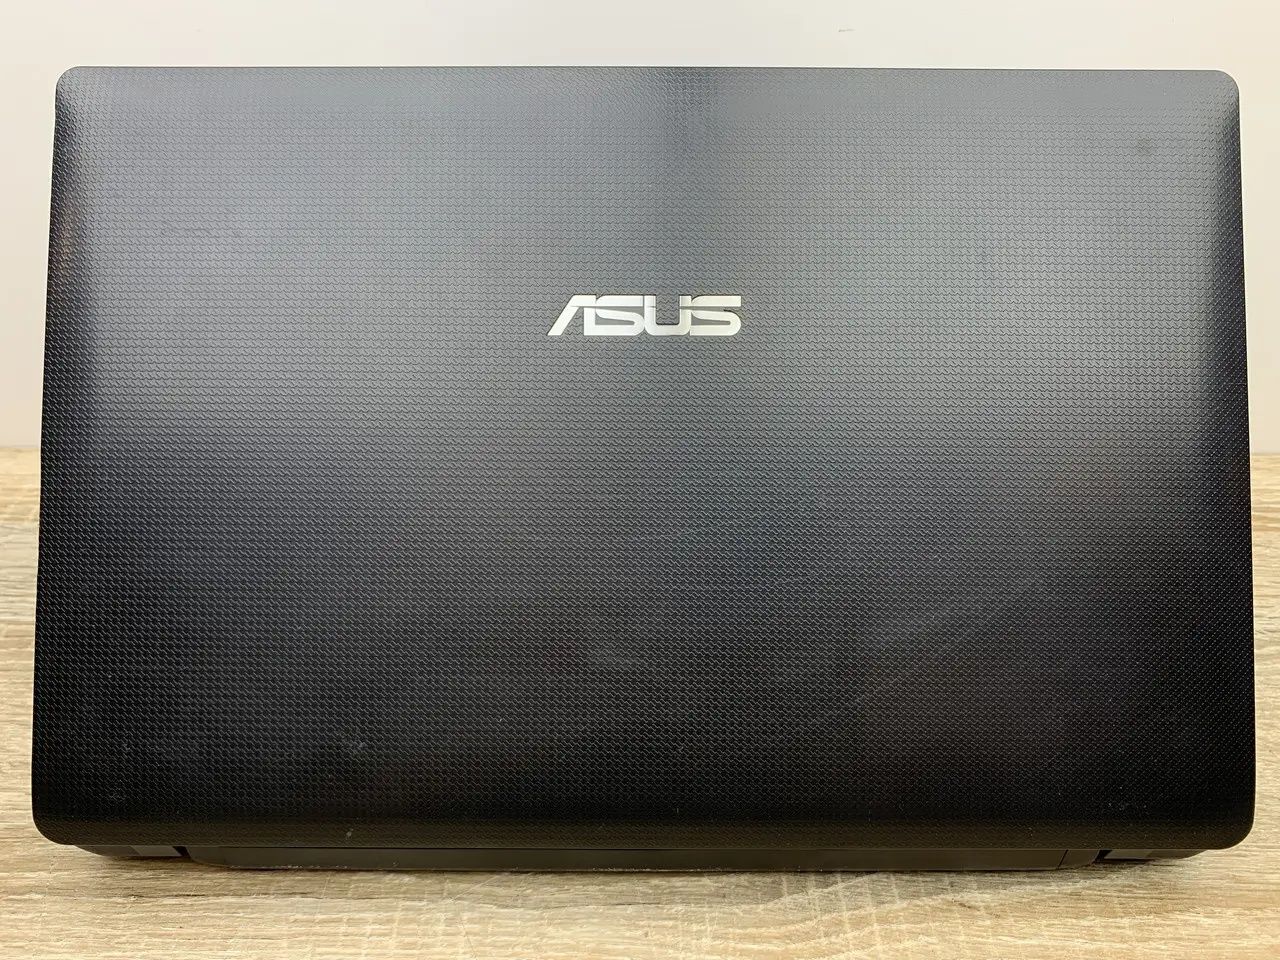 Asus Core i3 quad, 6gb RAM, HDD 320gb, 16inch display